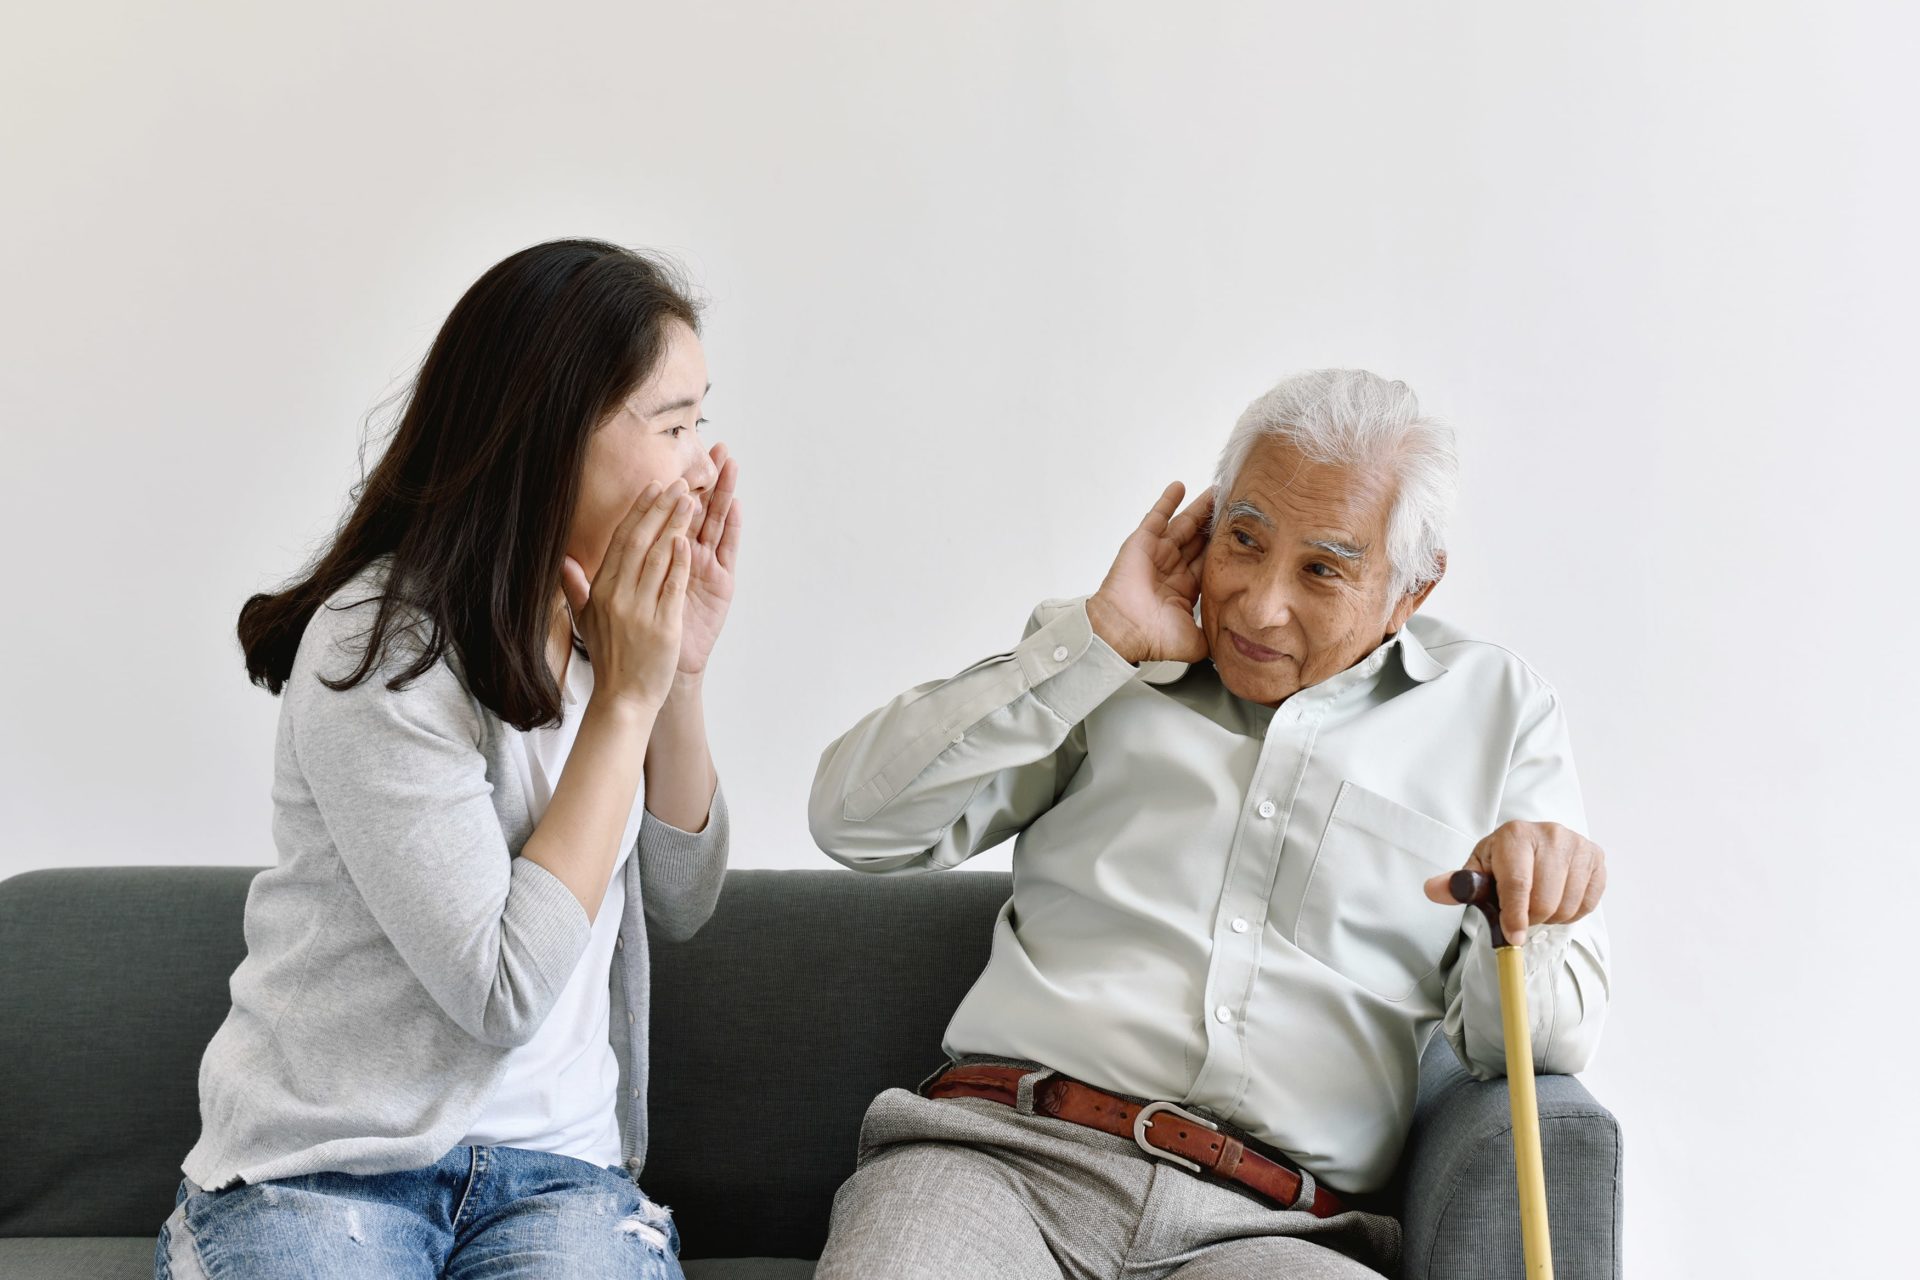 elderly man suffering from hearing loss